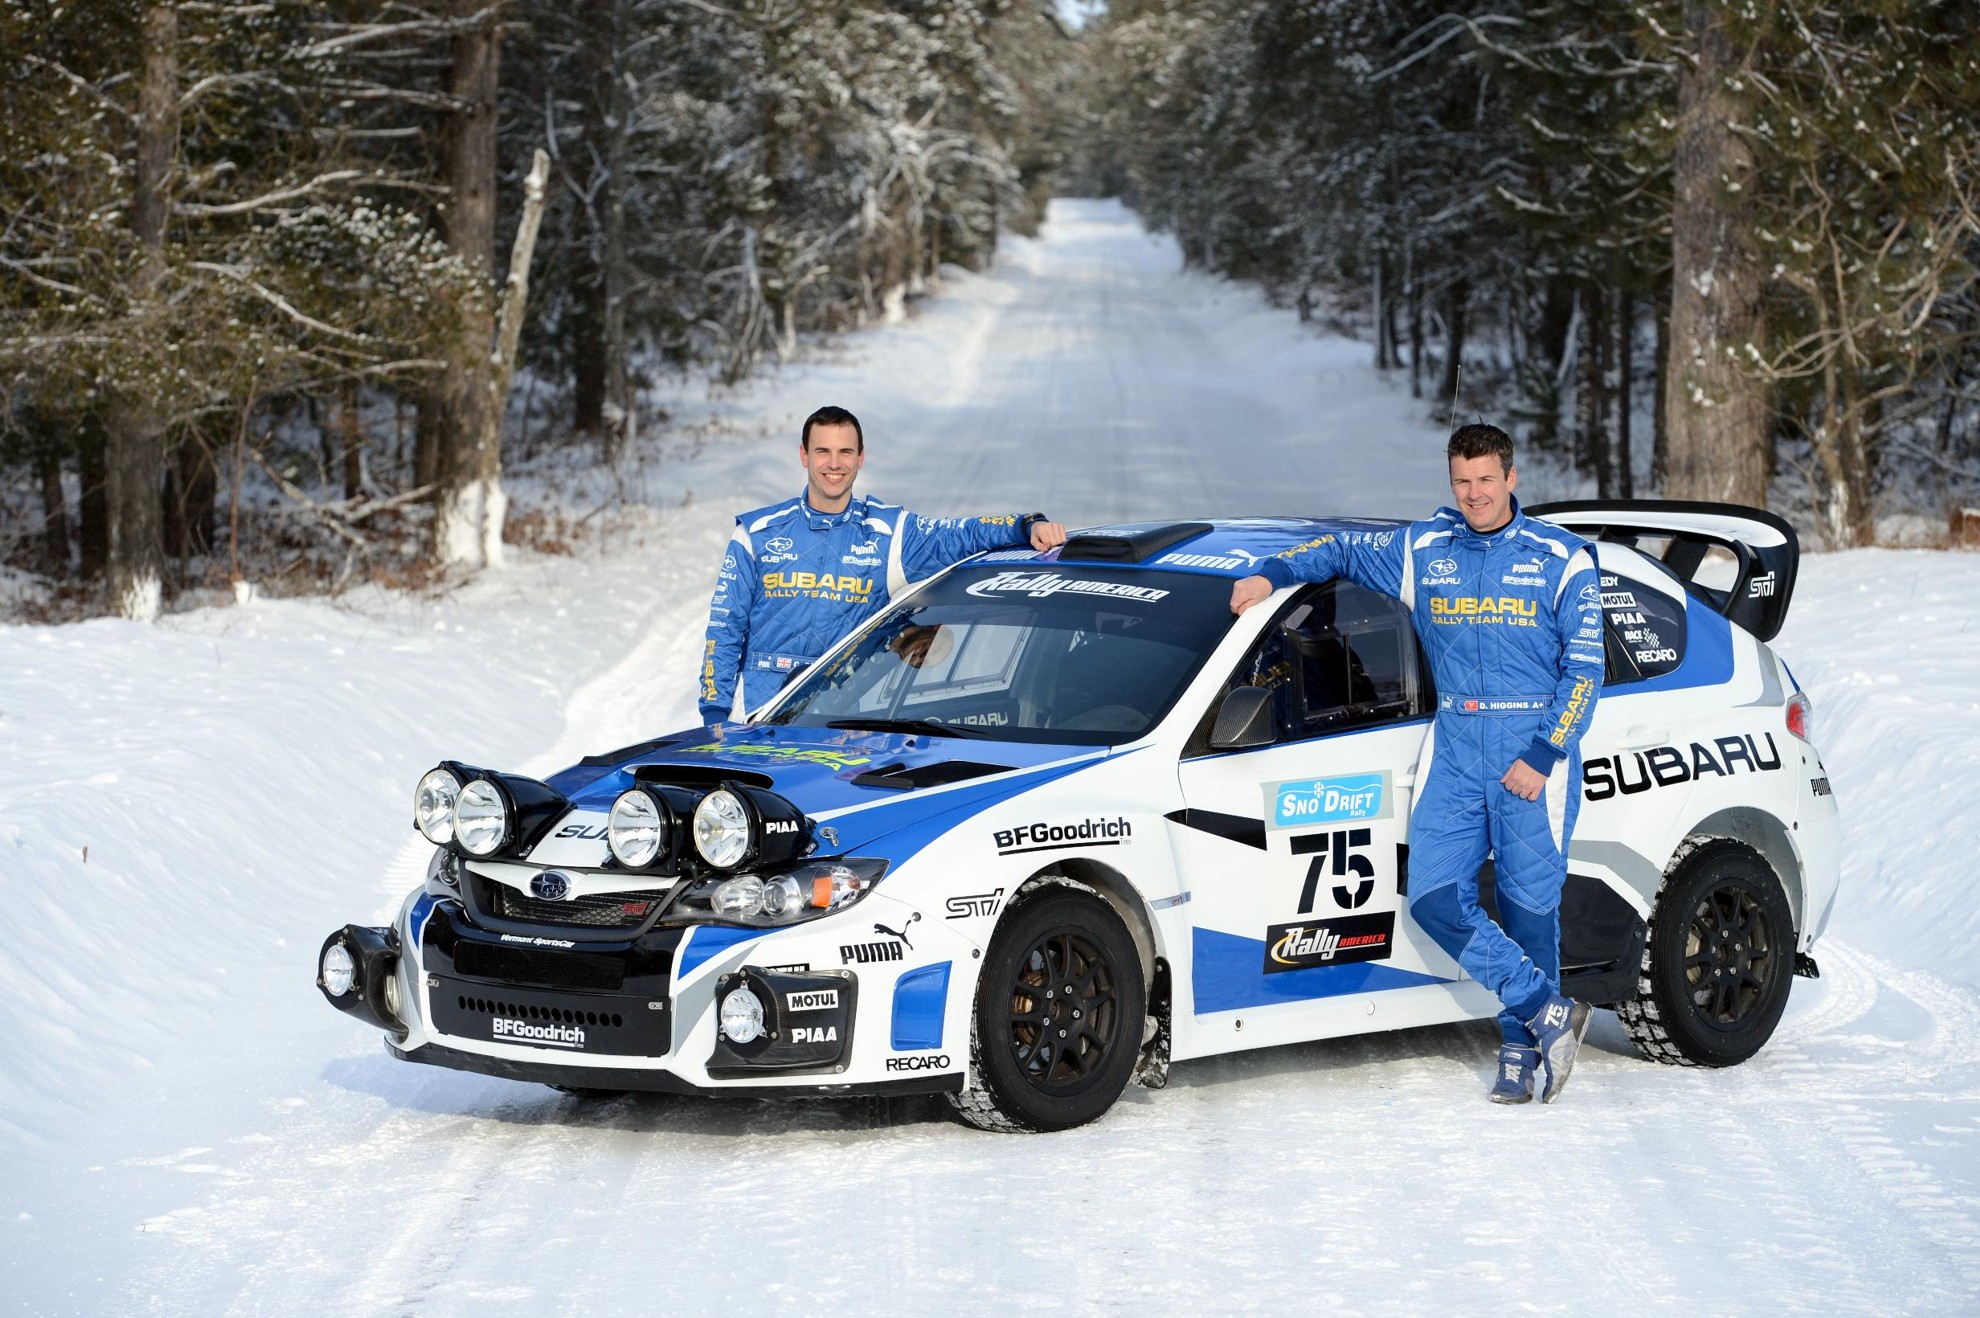 Rally USA Subaru Team ready for SnowDrift Rally